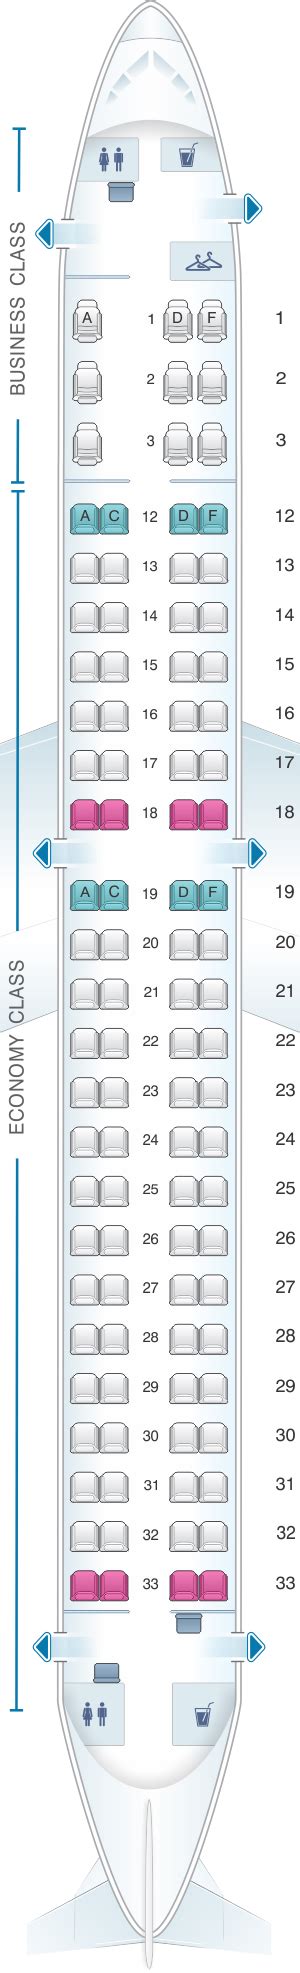 Seat Map Air Canada Embraer E190 Seatmaestro Aircraft E190 Seat Chart